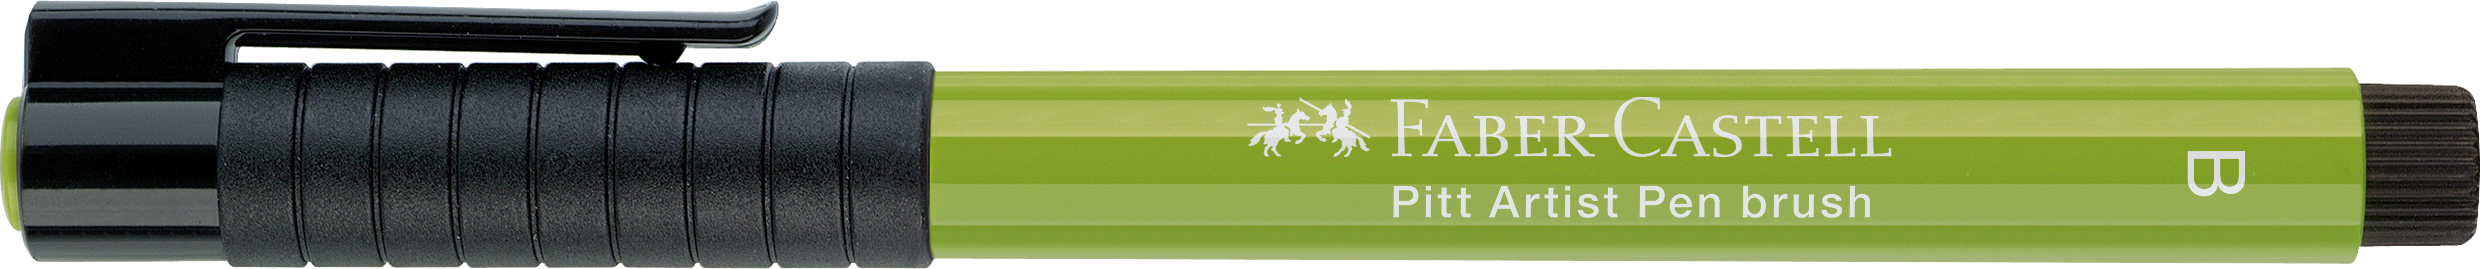 FABER-CASTELL Pitt Artist Pen Brush 2.5mm 167470 may green may green